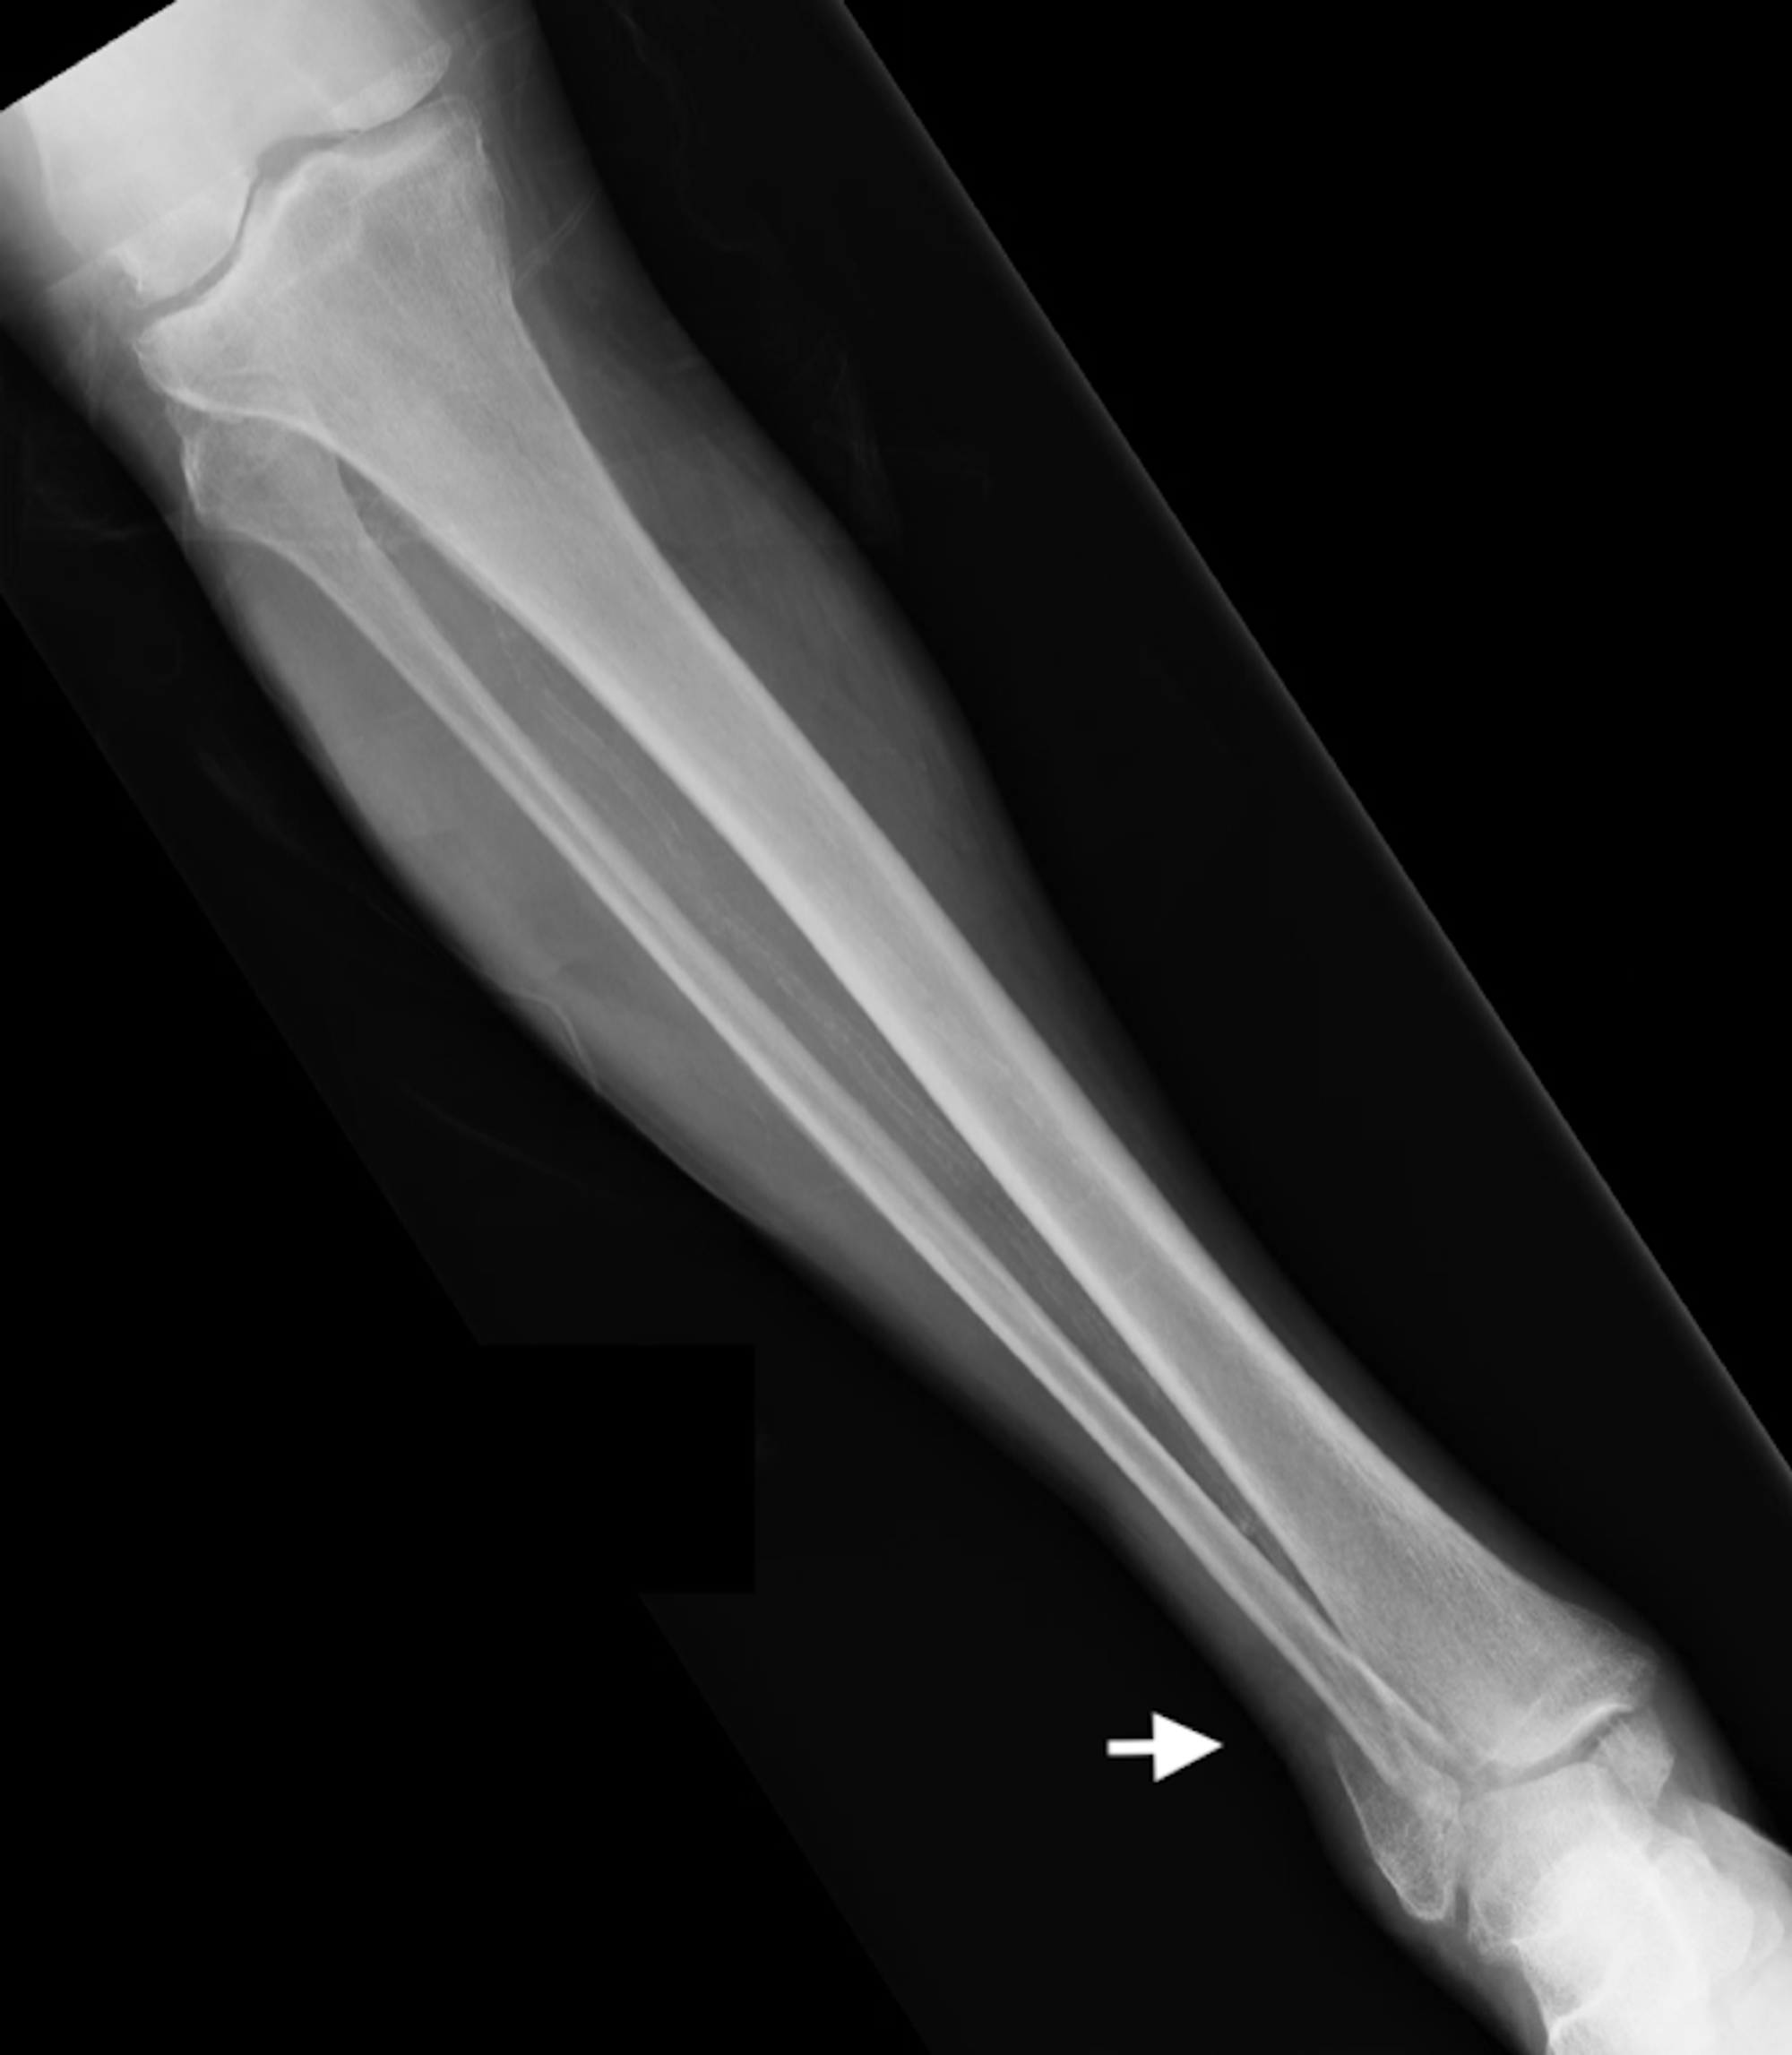 proximal and distal fibula fracture